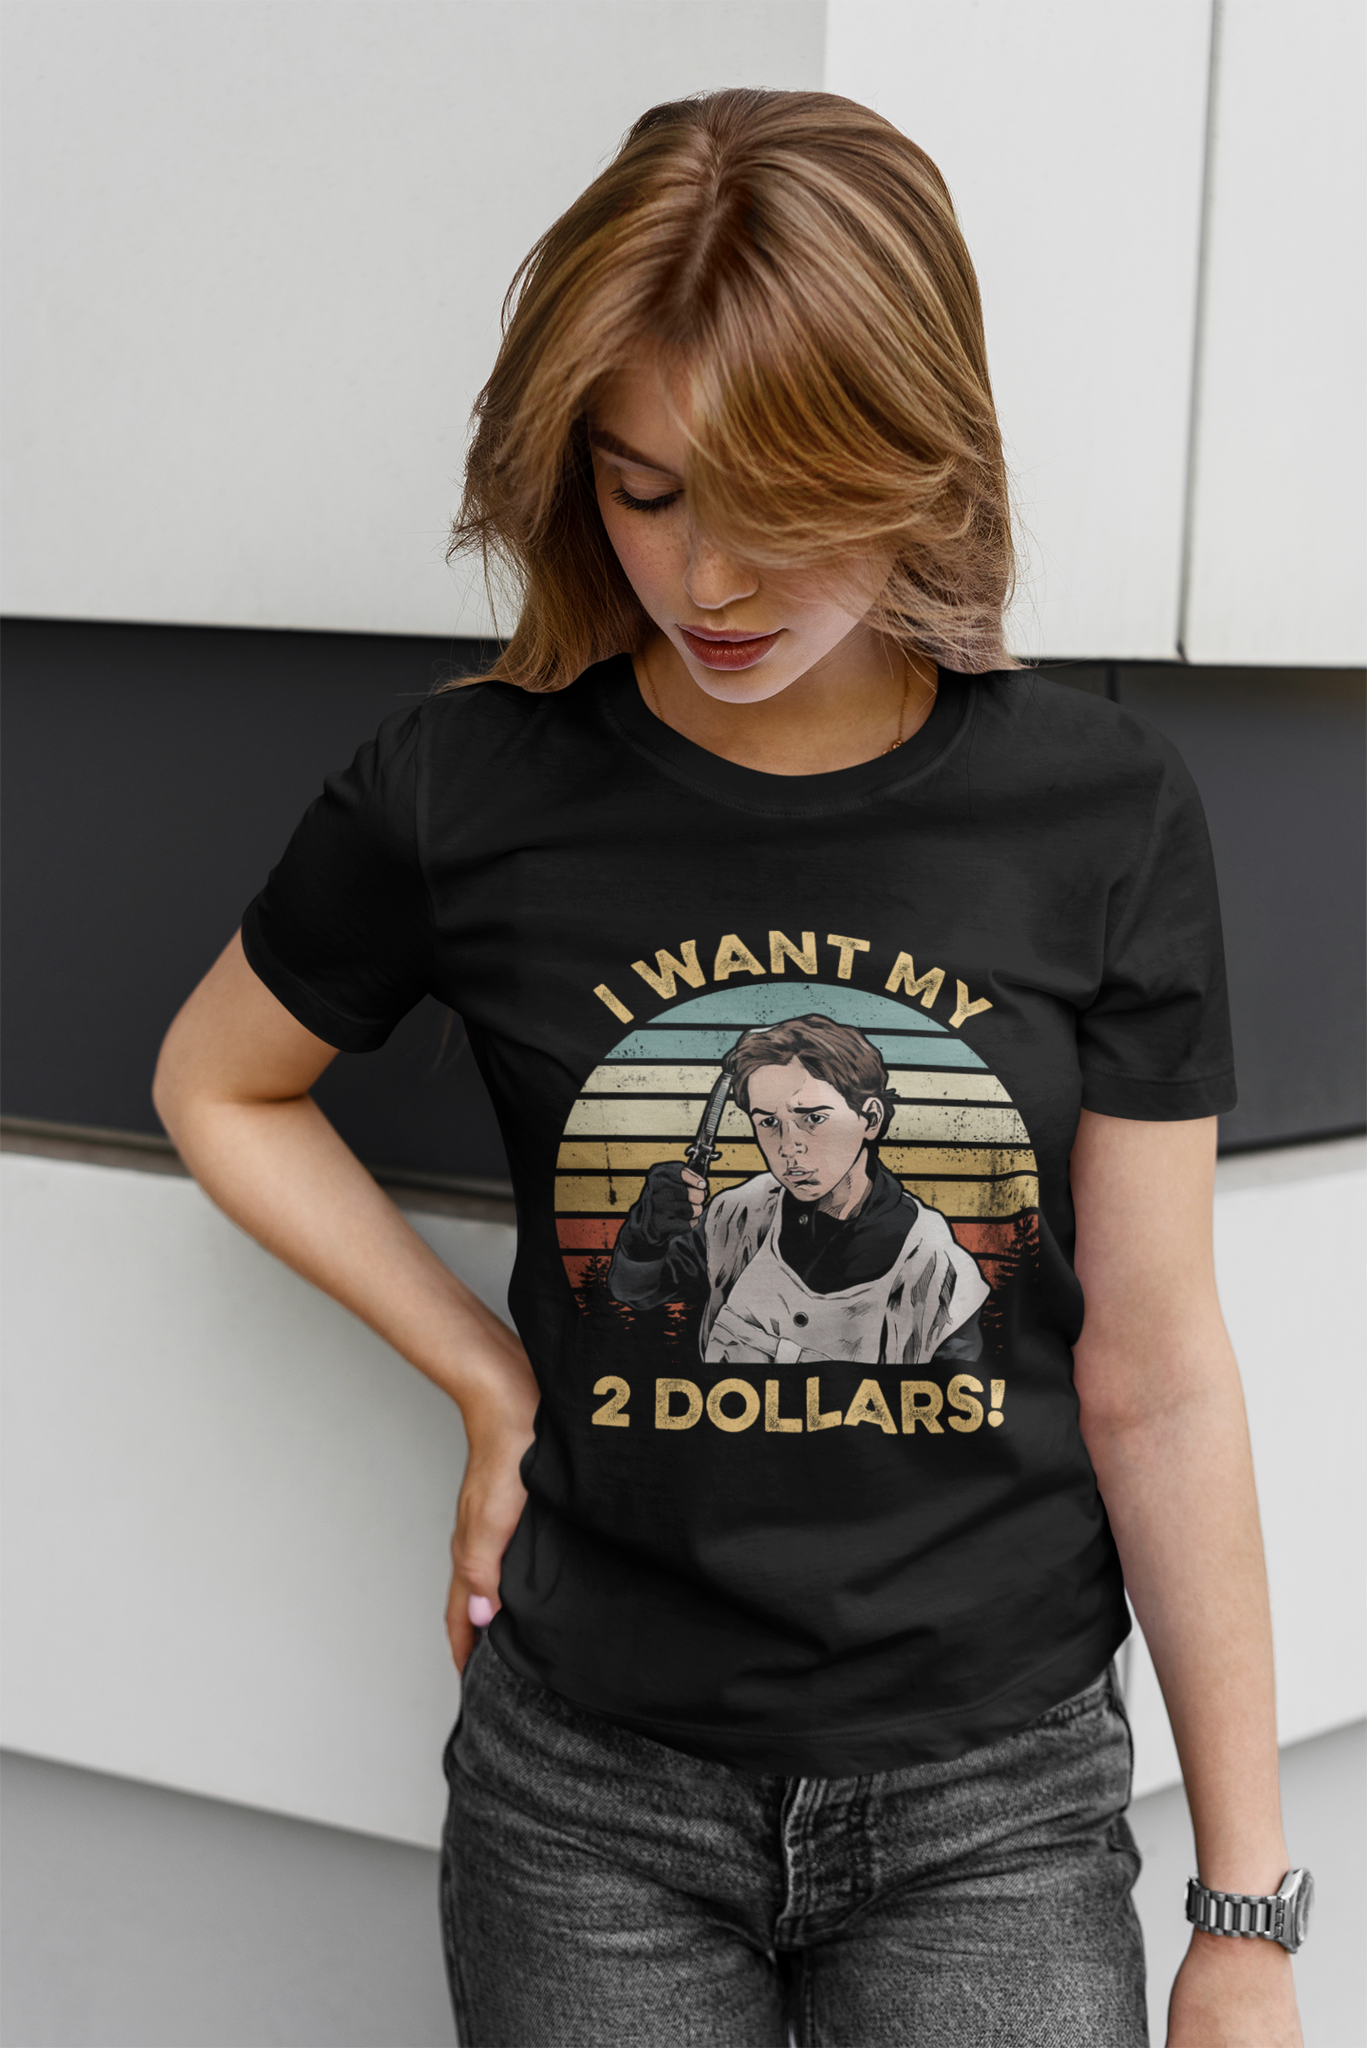 Better Off Dead Comedy Film T Shirt, Johnny Gasparini T Shirt, I Want My 2 Dollars Tshirt